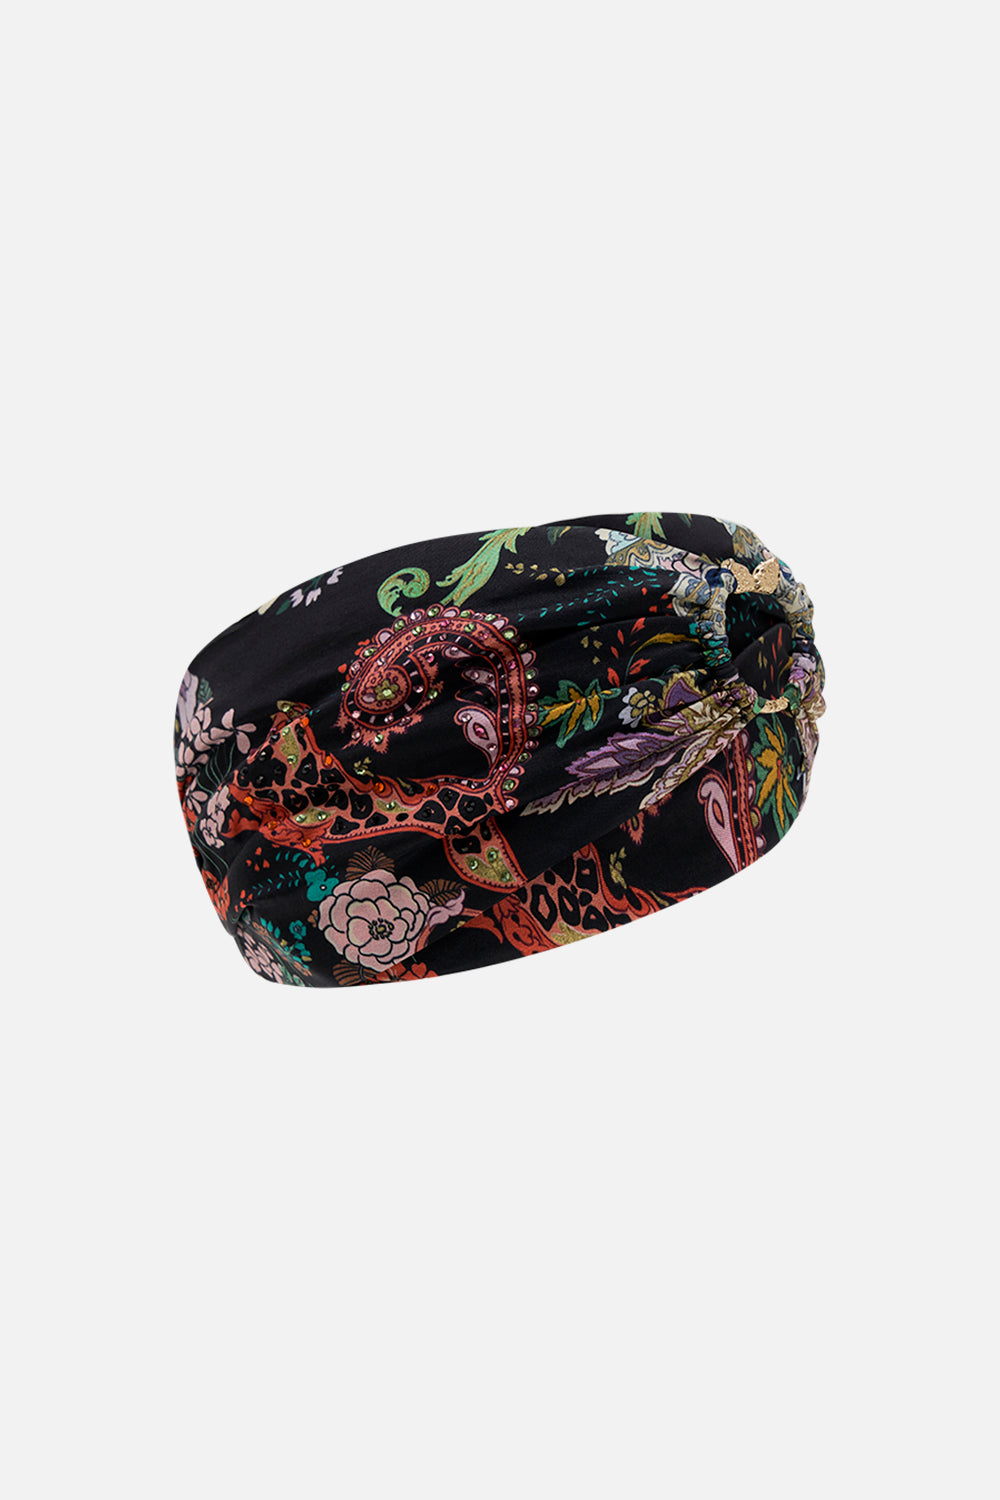 CAMILA silk headband in We Wore Folklore print